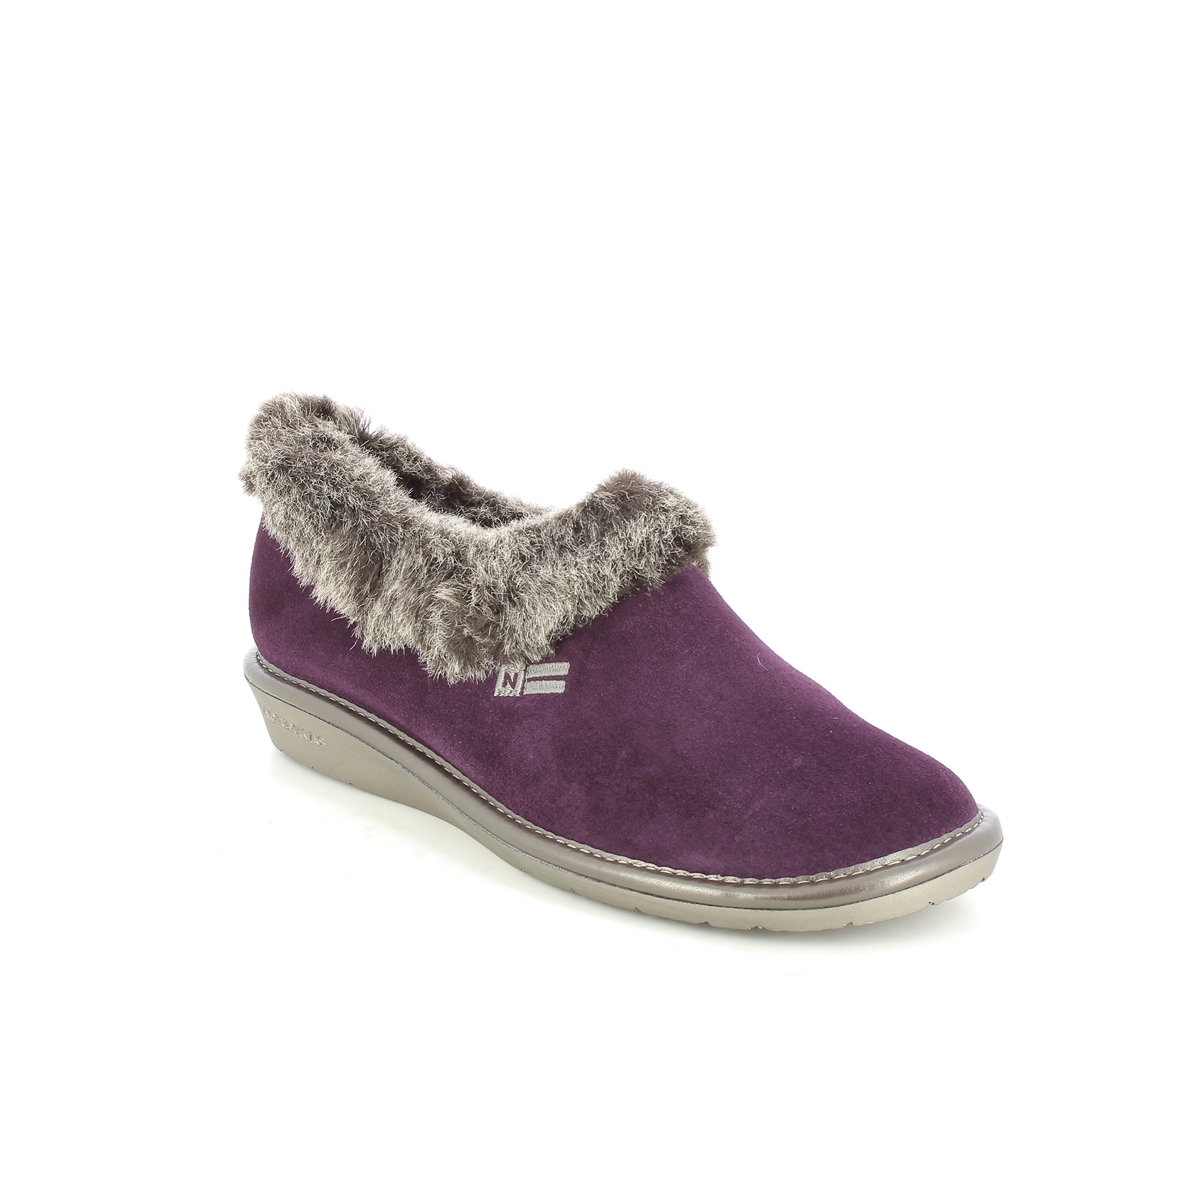 Nordikas Toasty Fur Purple Suede Womens Slippers 1358-95 In Size 40 In Plain Purple Suede